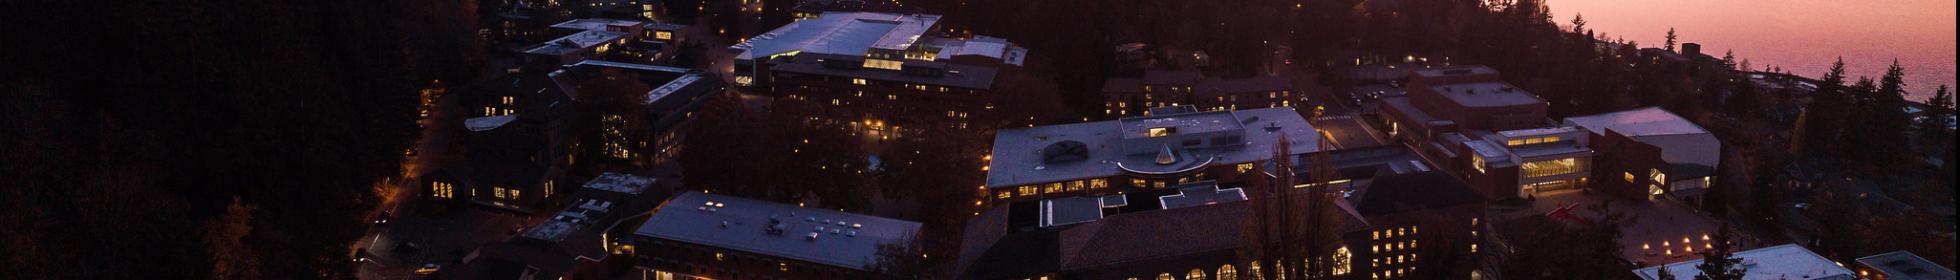 Western Washington University campus, overhead view at sunset